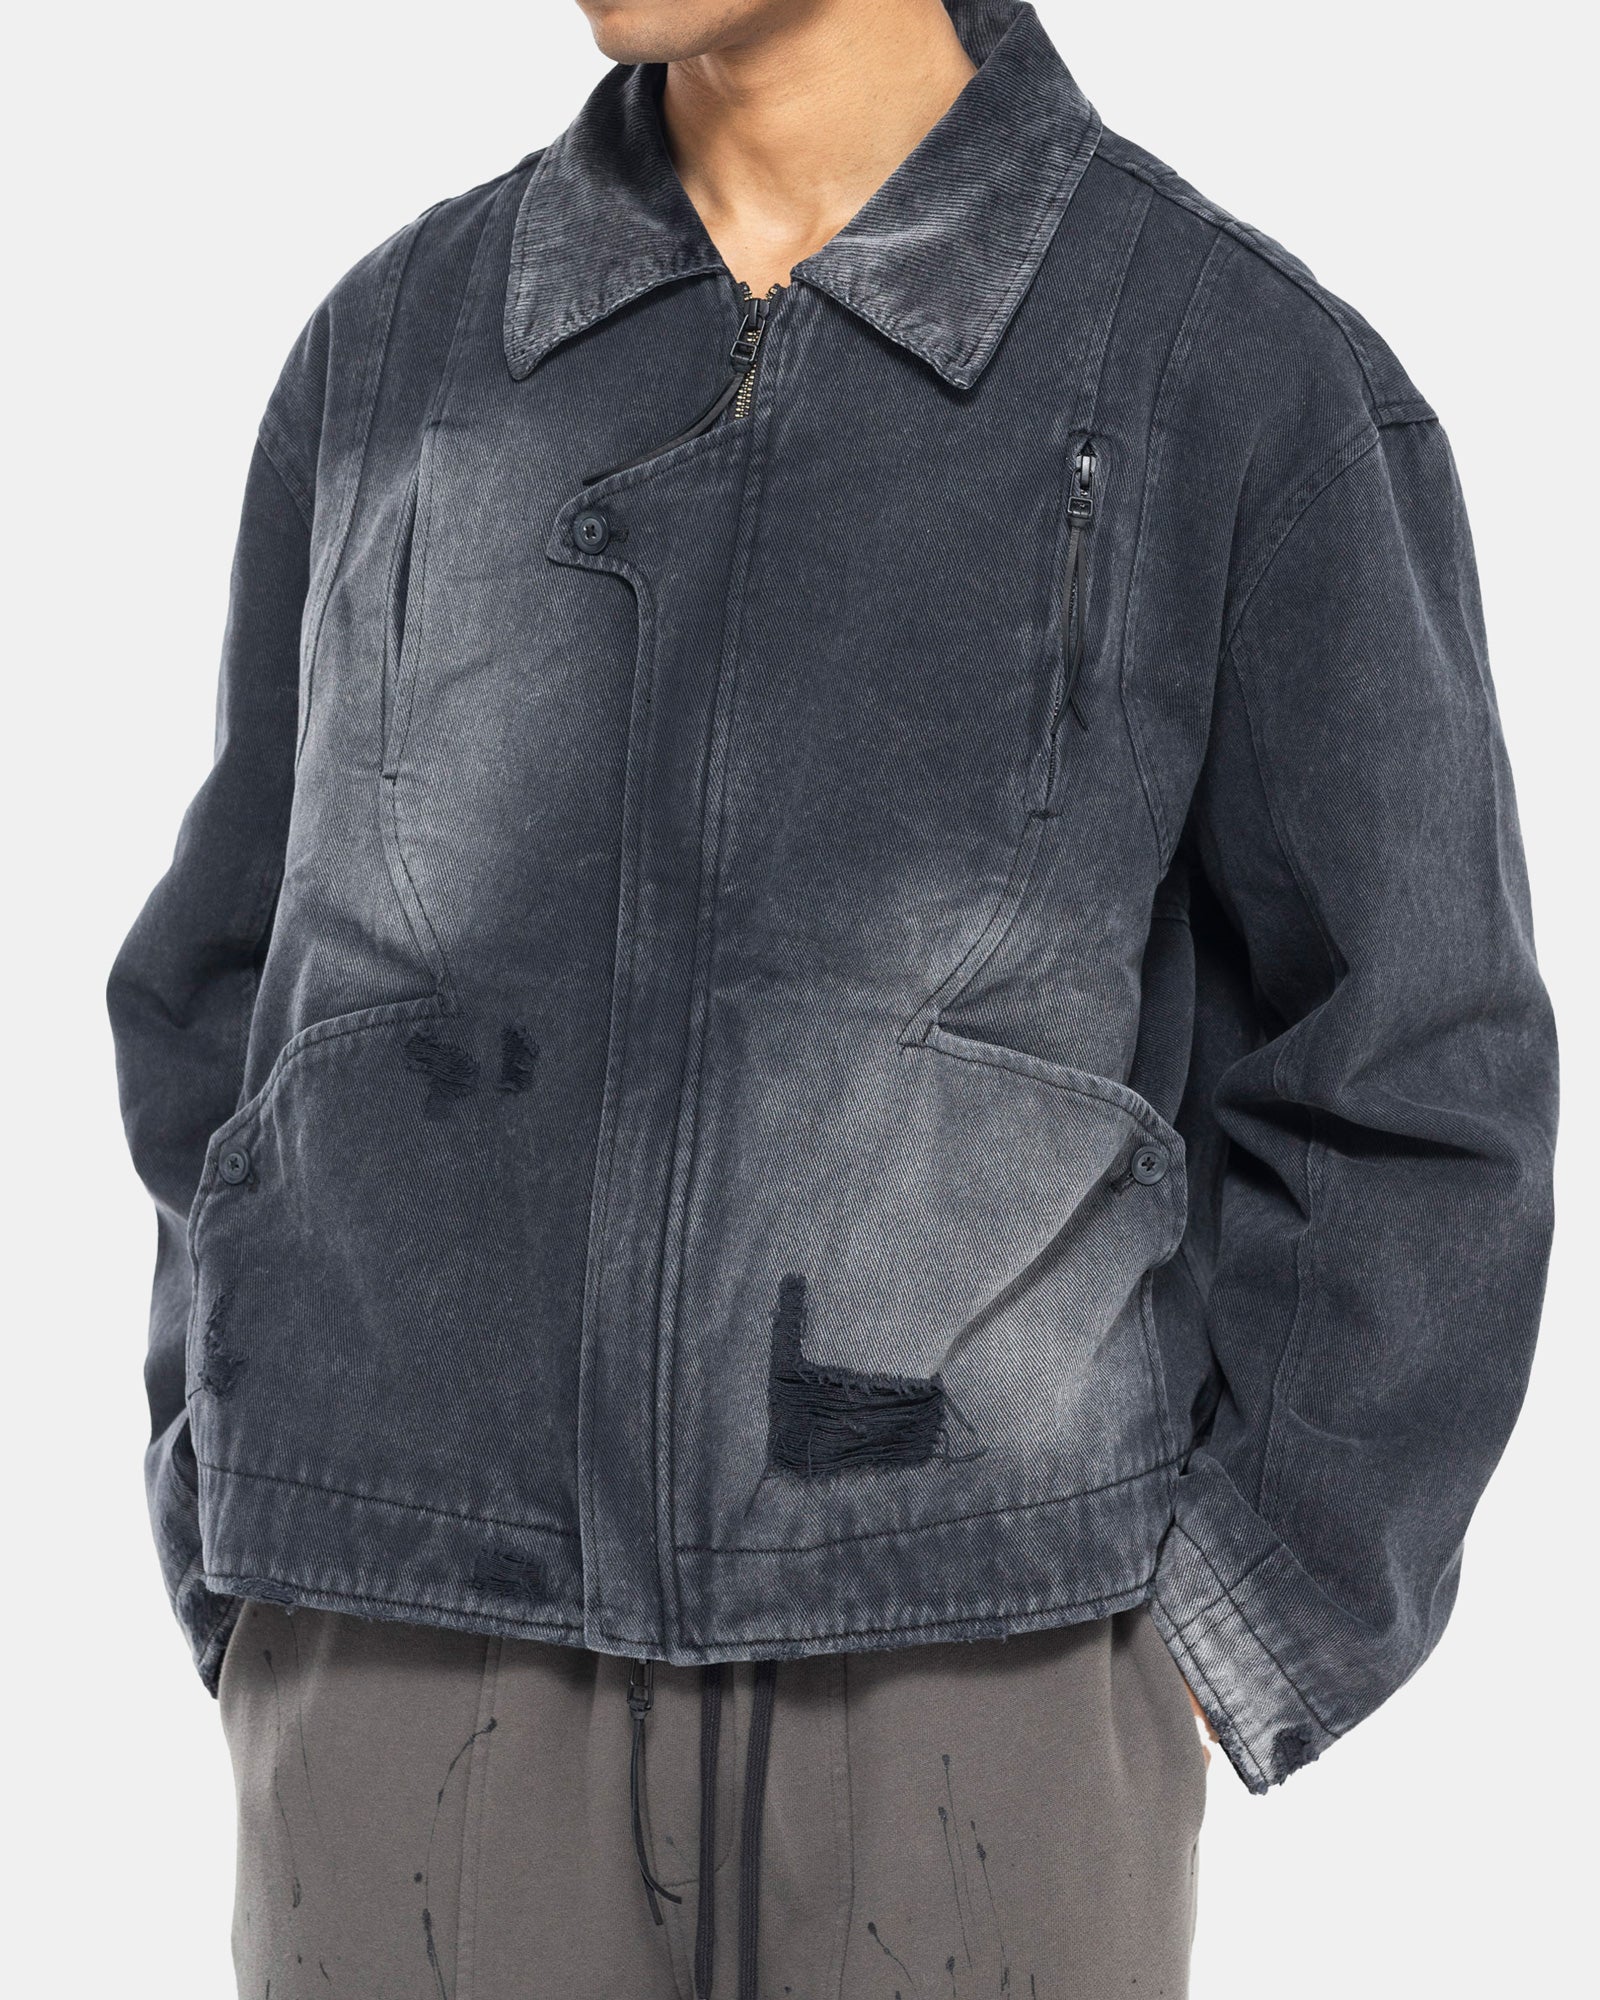 Male model wearing Professor.E grey jacket on white background